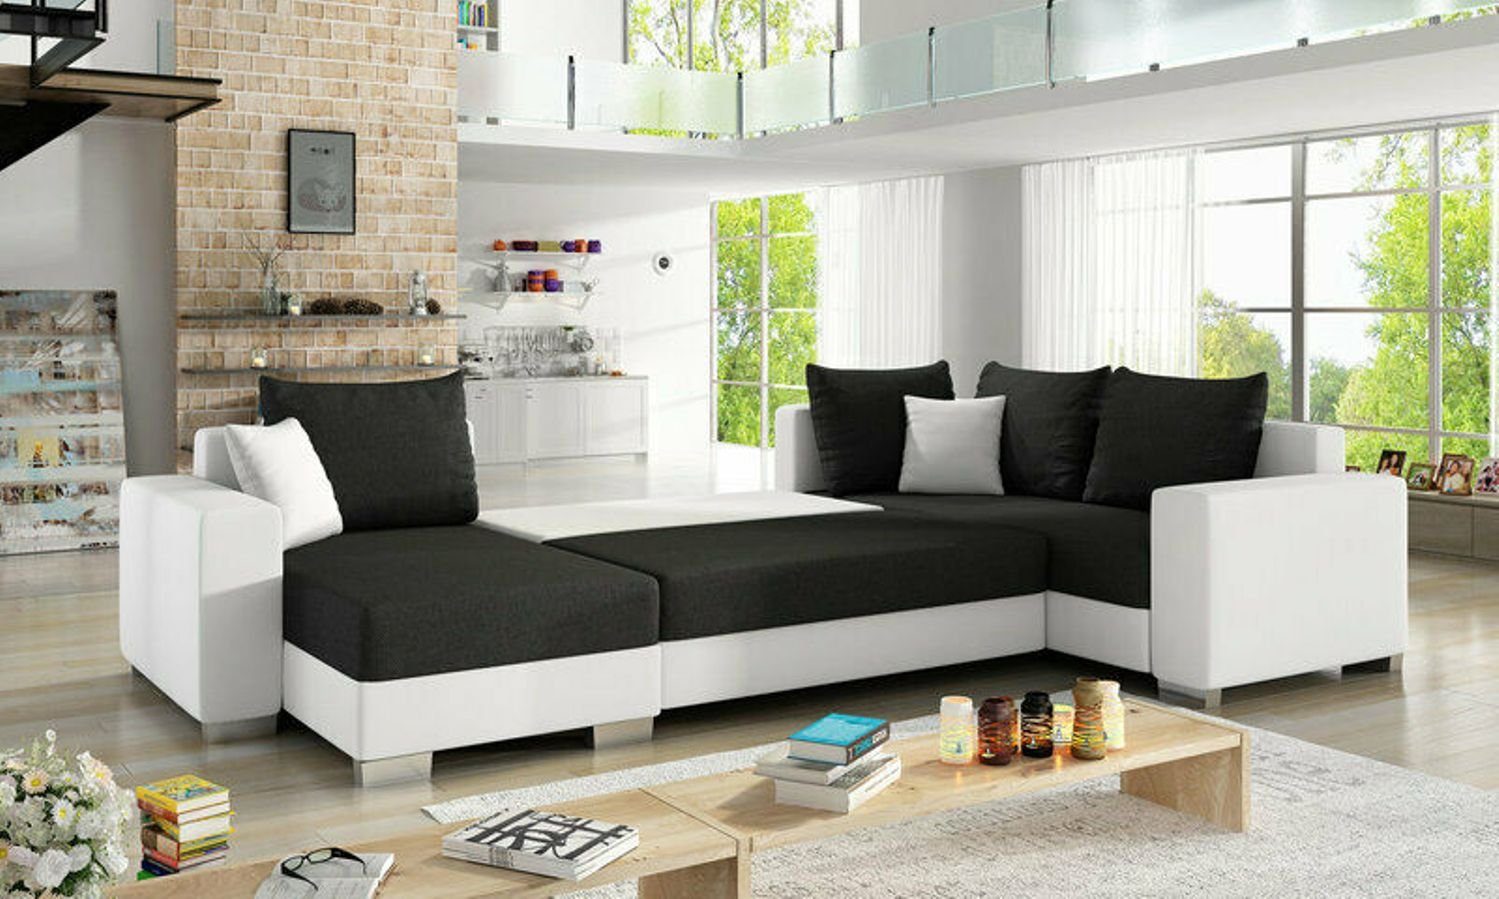 JVmoebel Ecksofa Design Ecksofa Schlafsofa Bettfunktion Couch Leder Polster Textil, Mit Bettfunktion Schwarz/Weiß